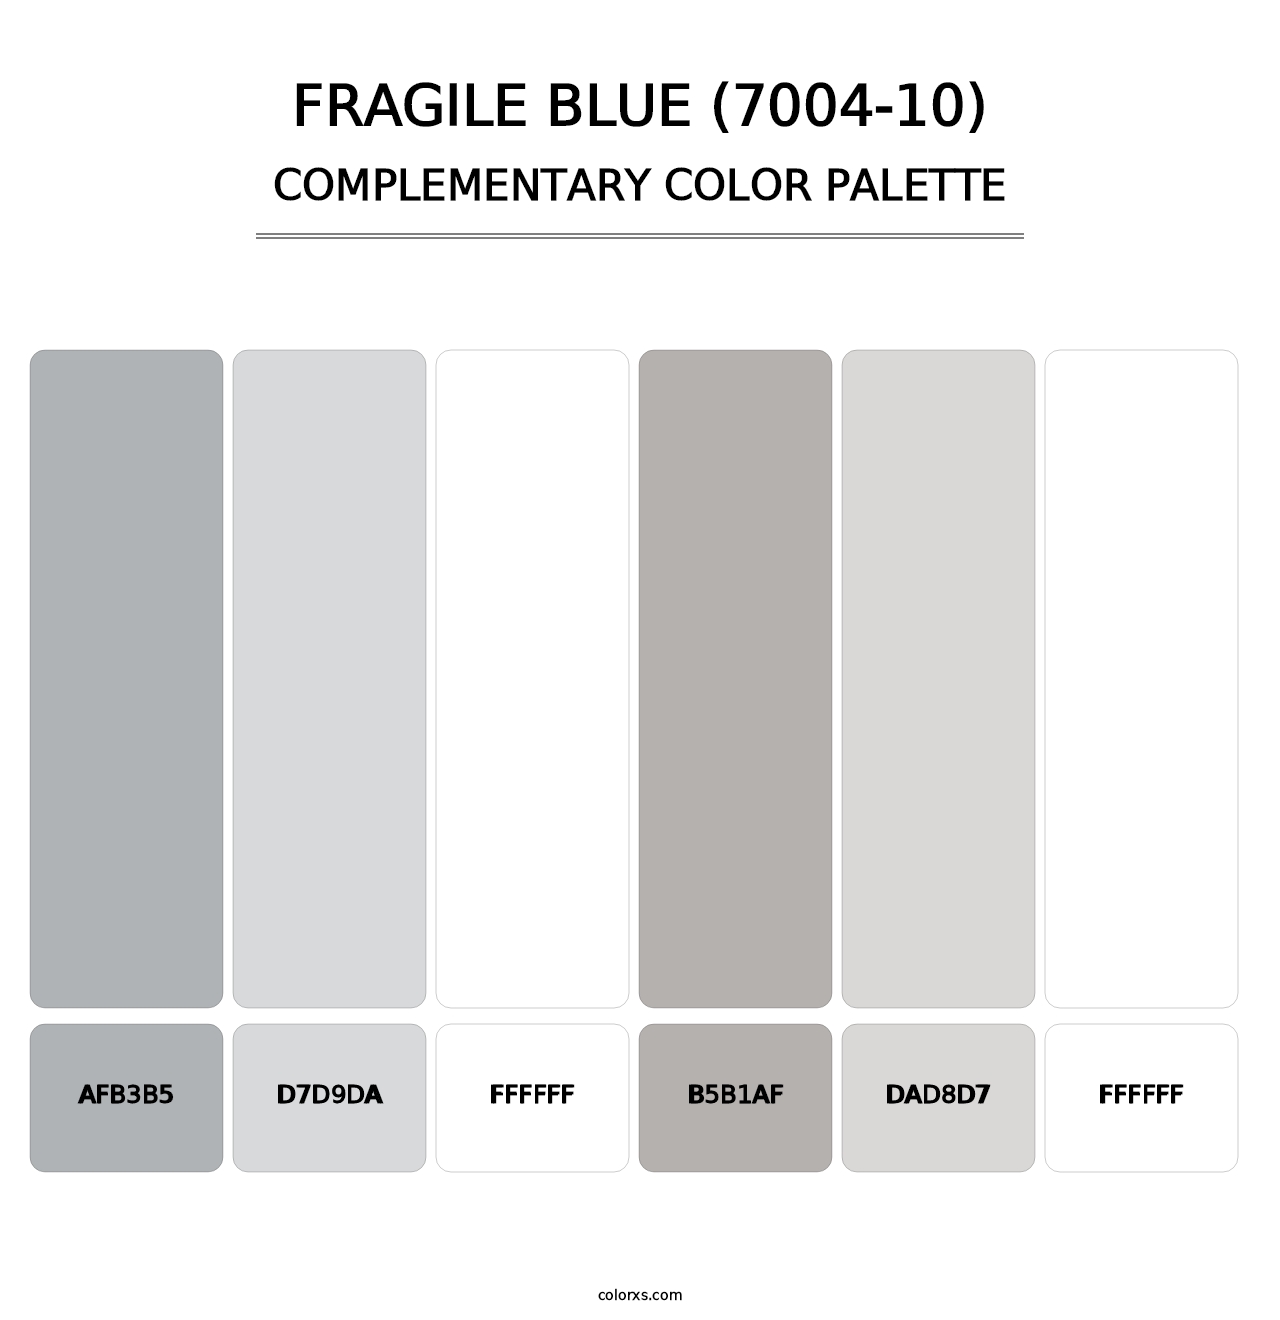 Fragile Blue (7004-10) - Complementary Color Palette